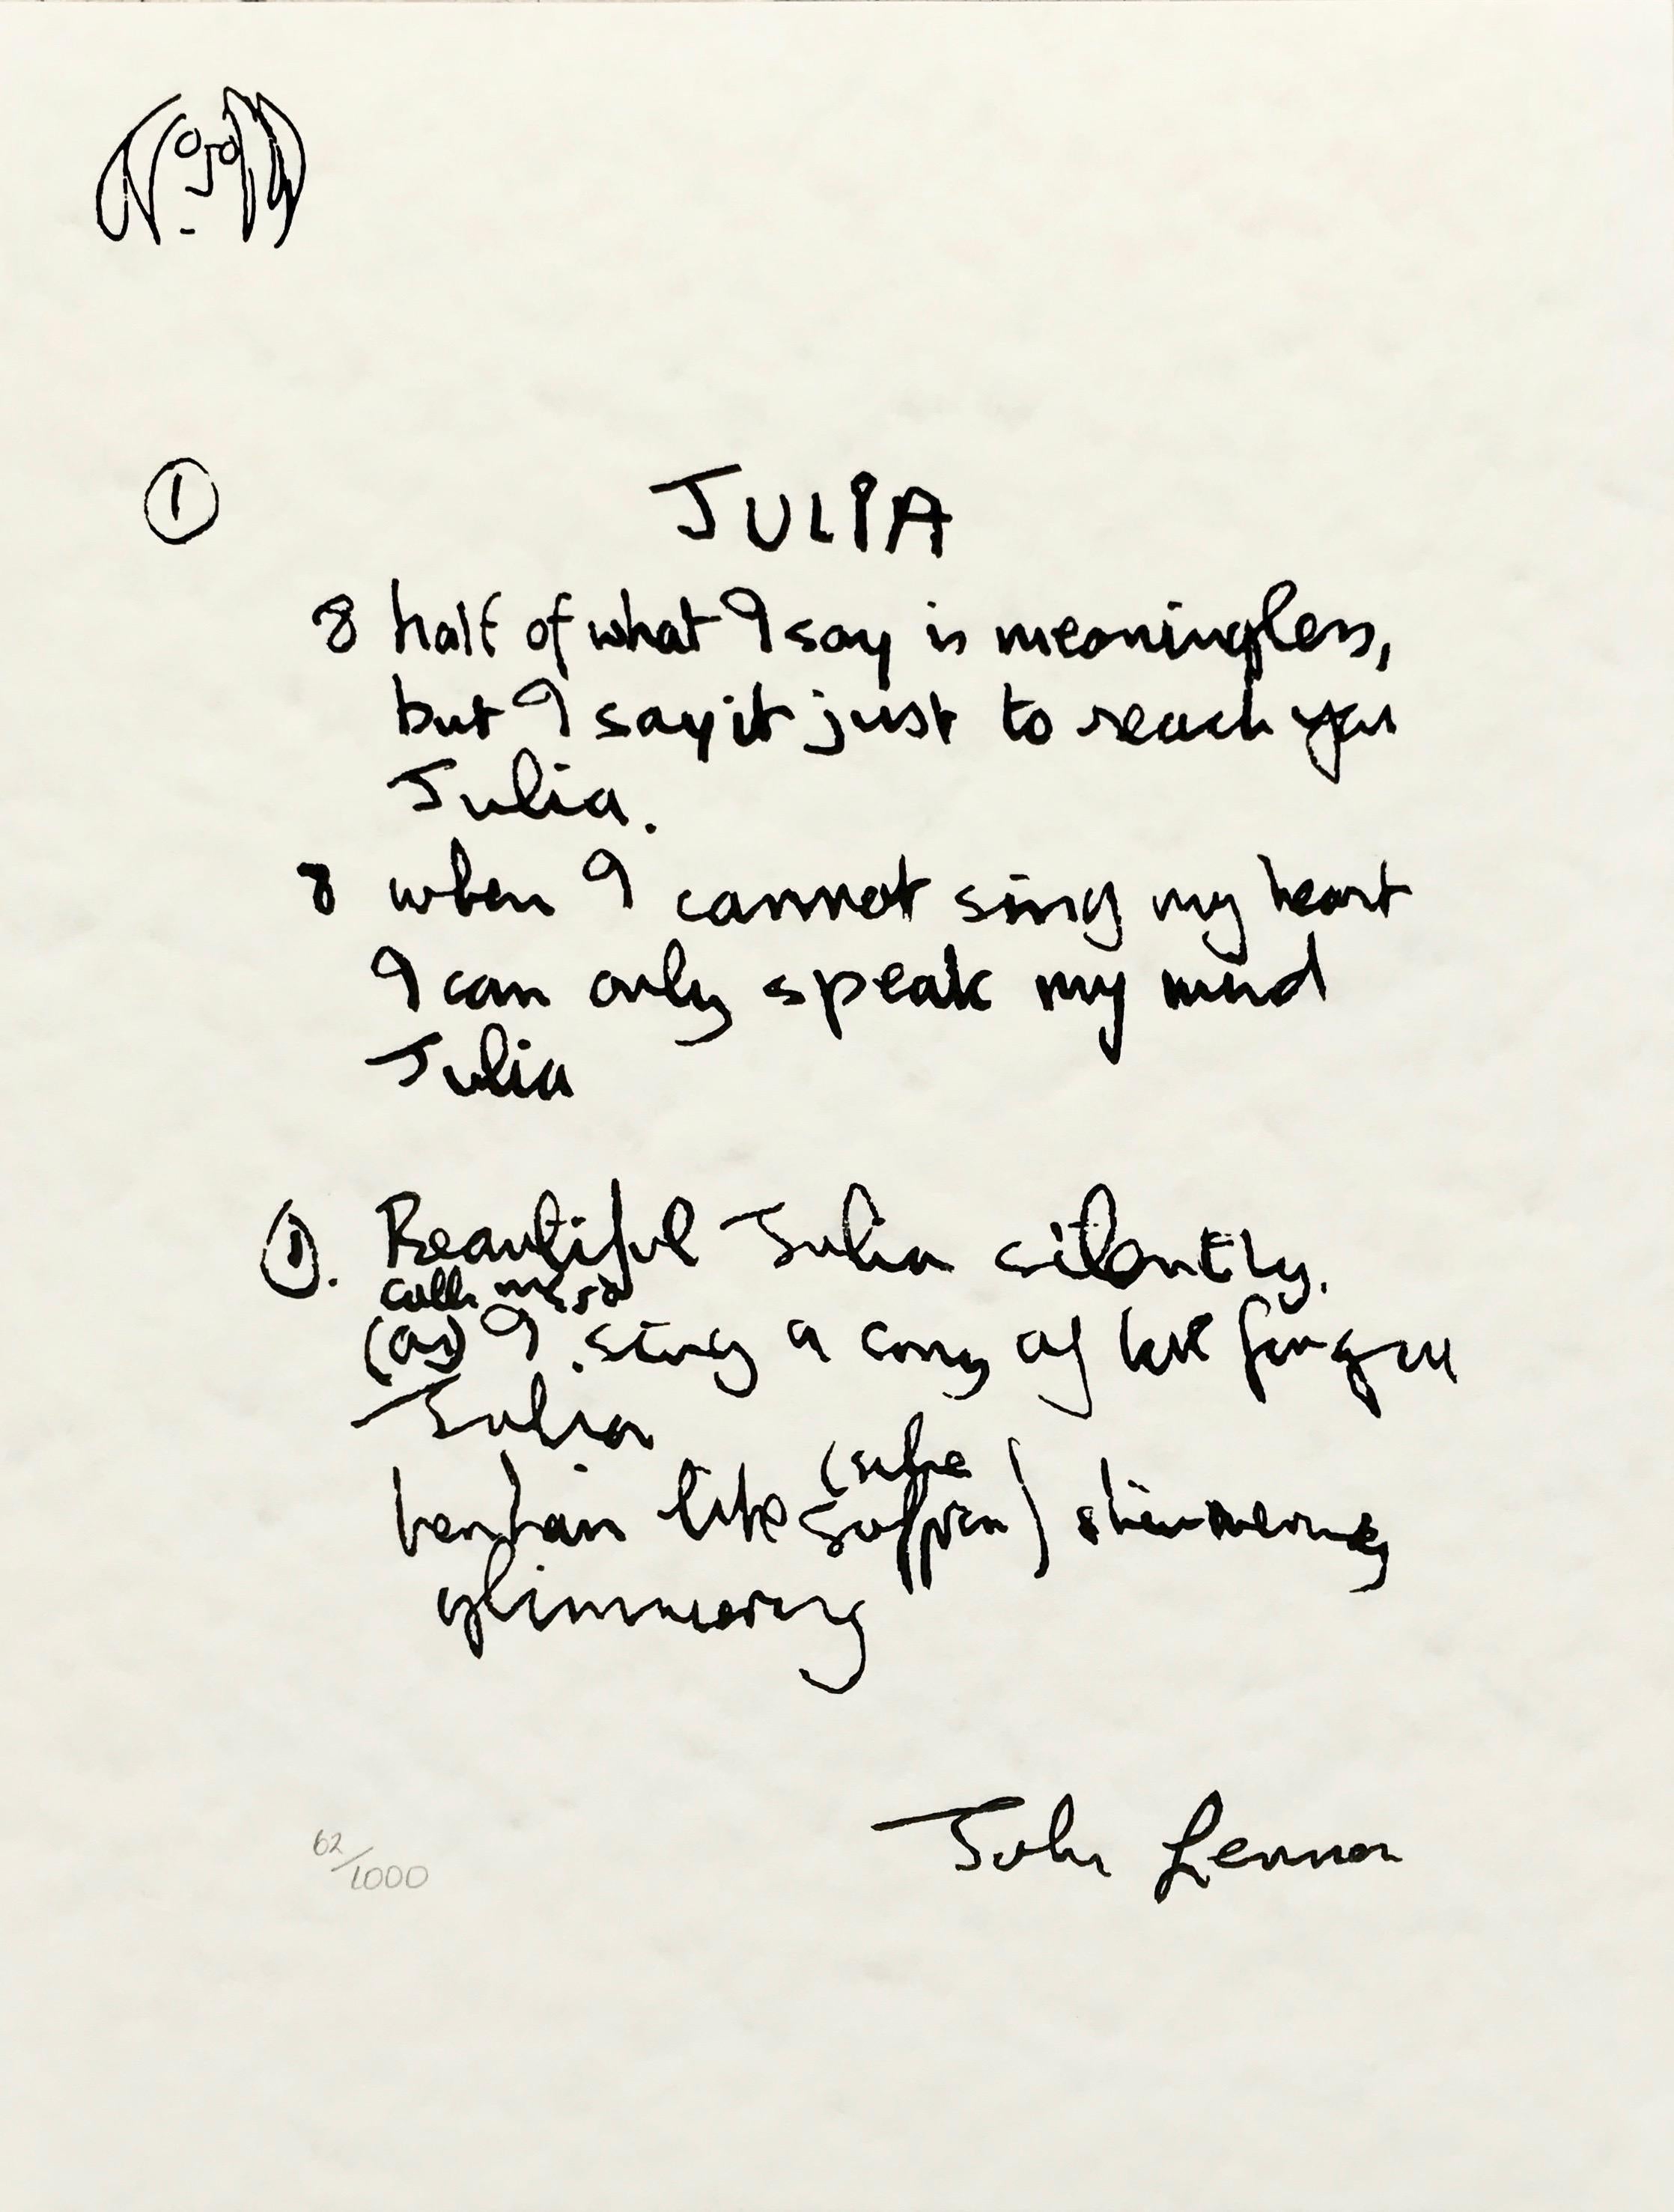 Rare Silk Screen Artists Proof of John Lennon's Handwritten Lyrics